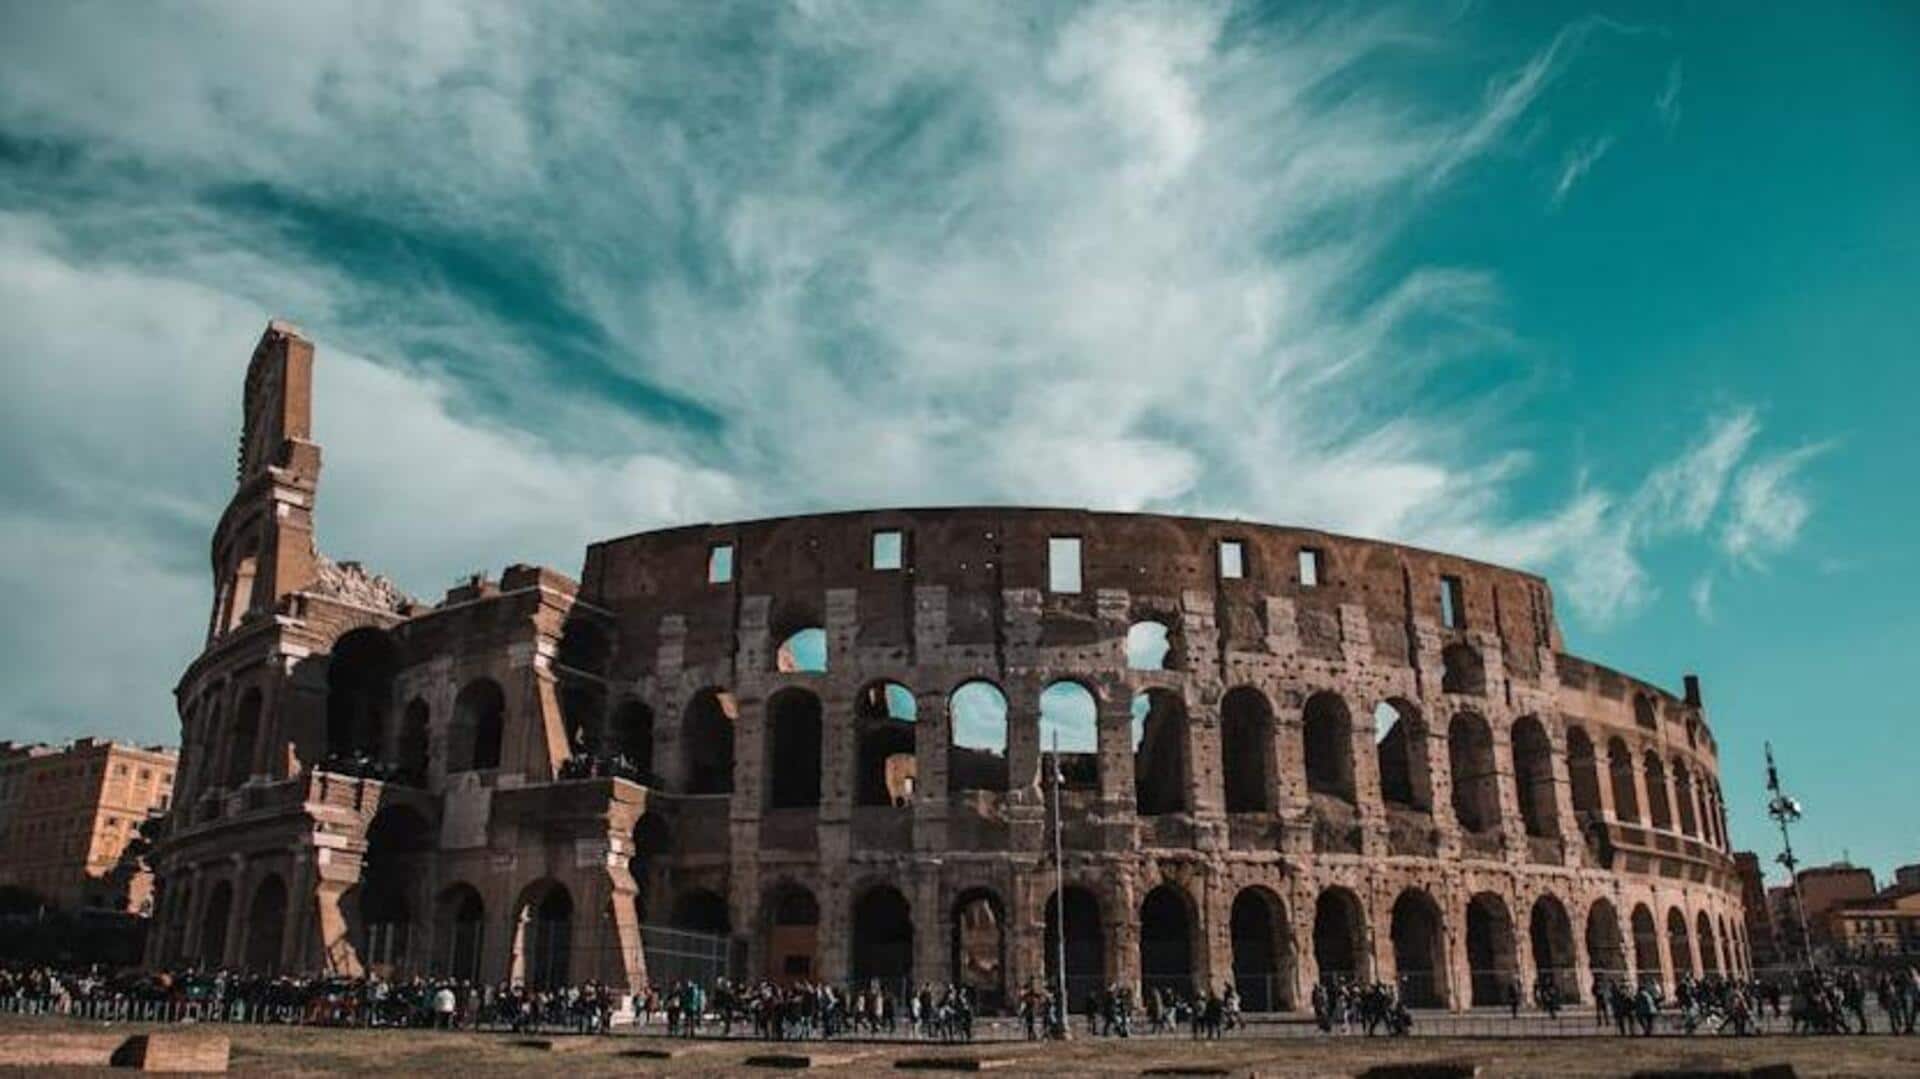 Explore Rome's hidden historical treasures